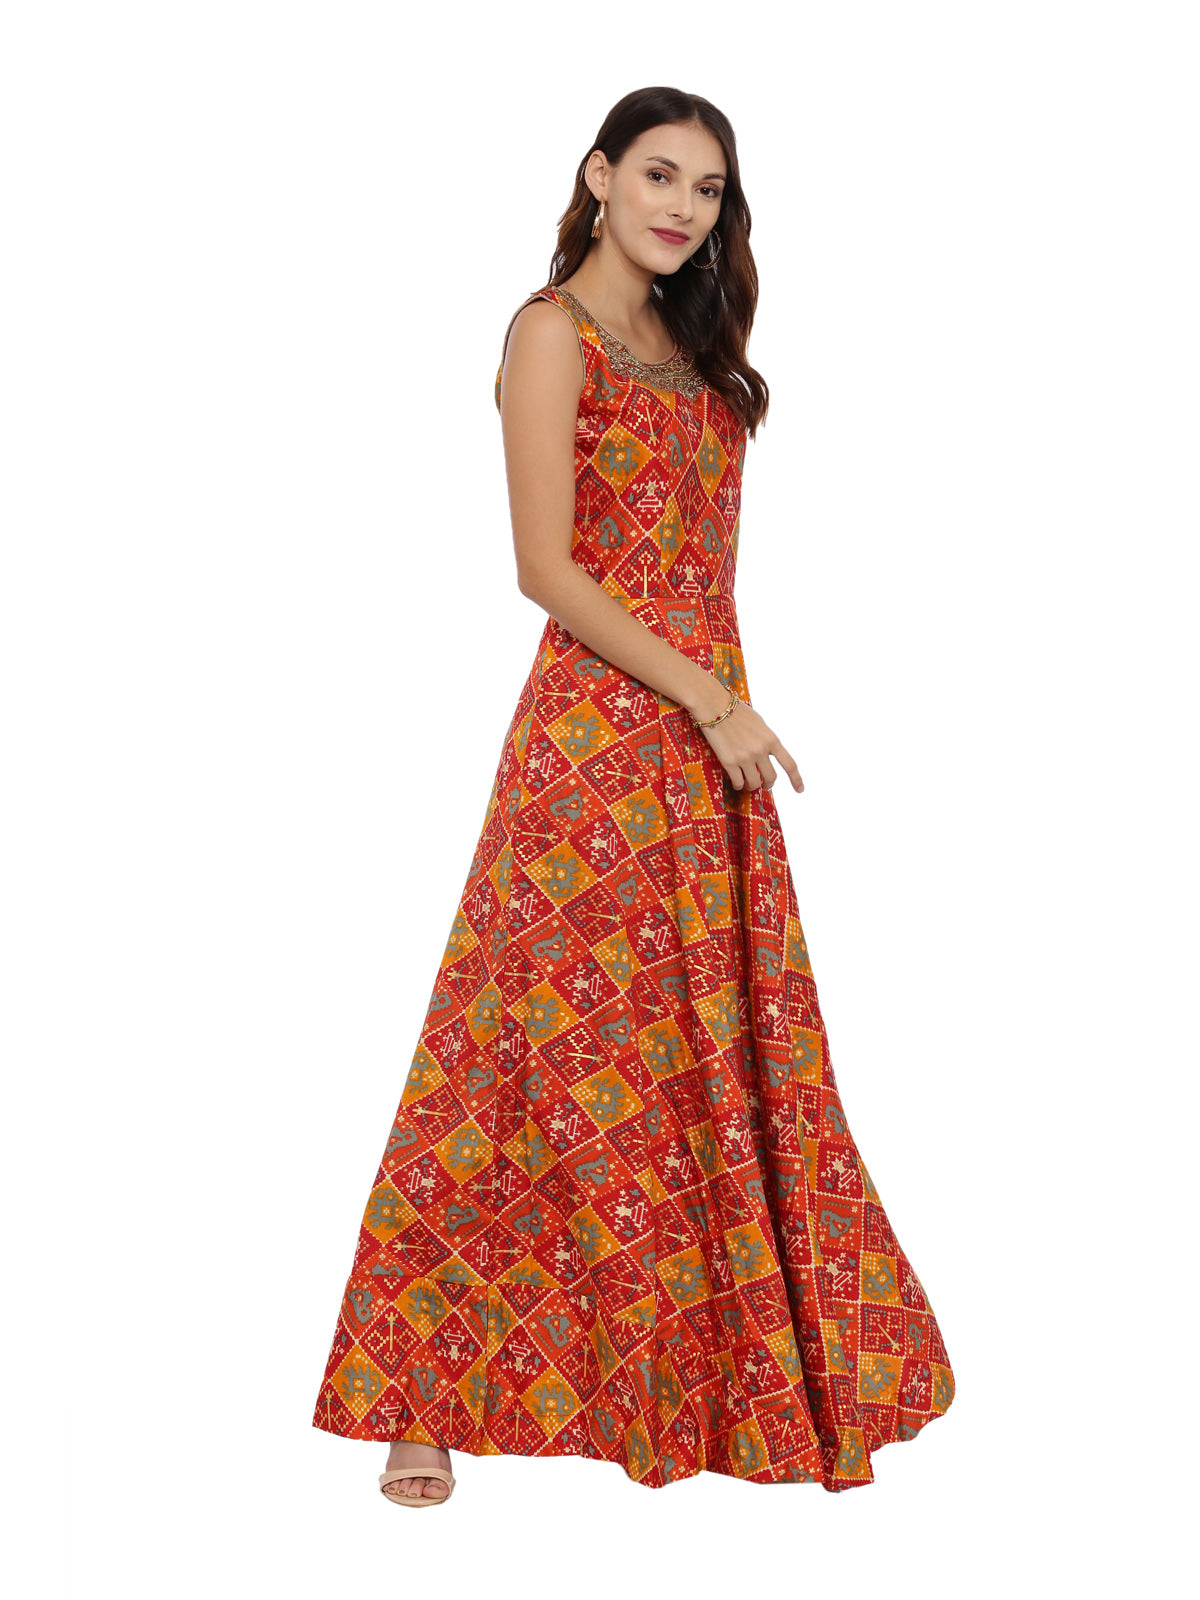 Neeru's Red Color Silk Fabric Sleeveless Suit-Anarkali